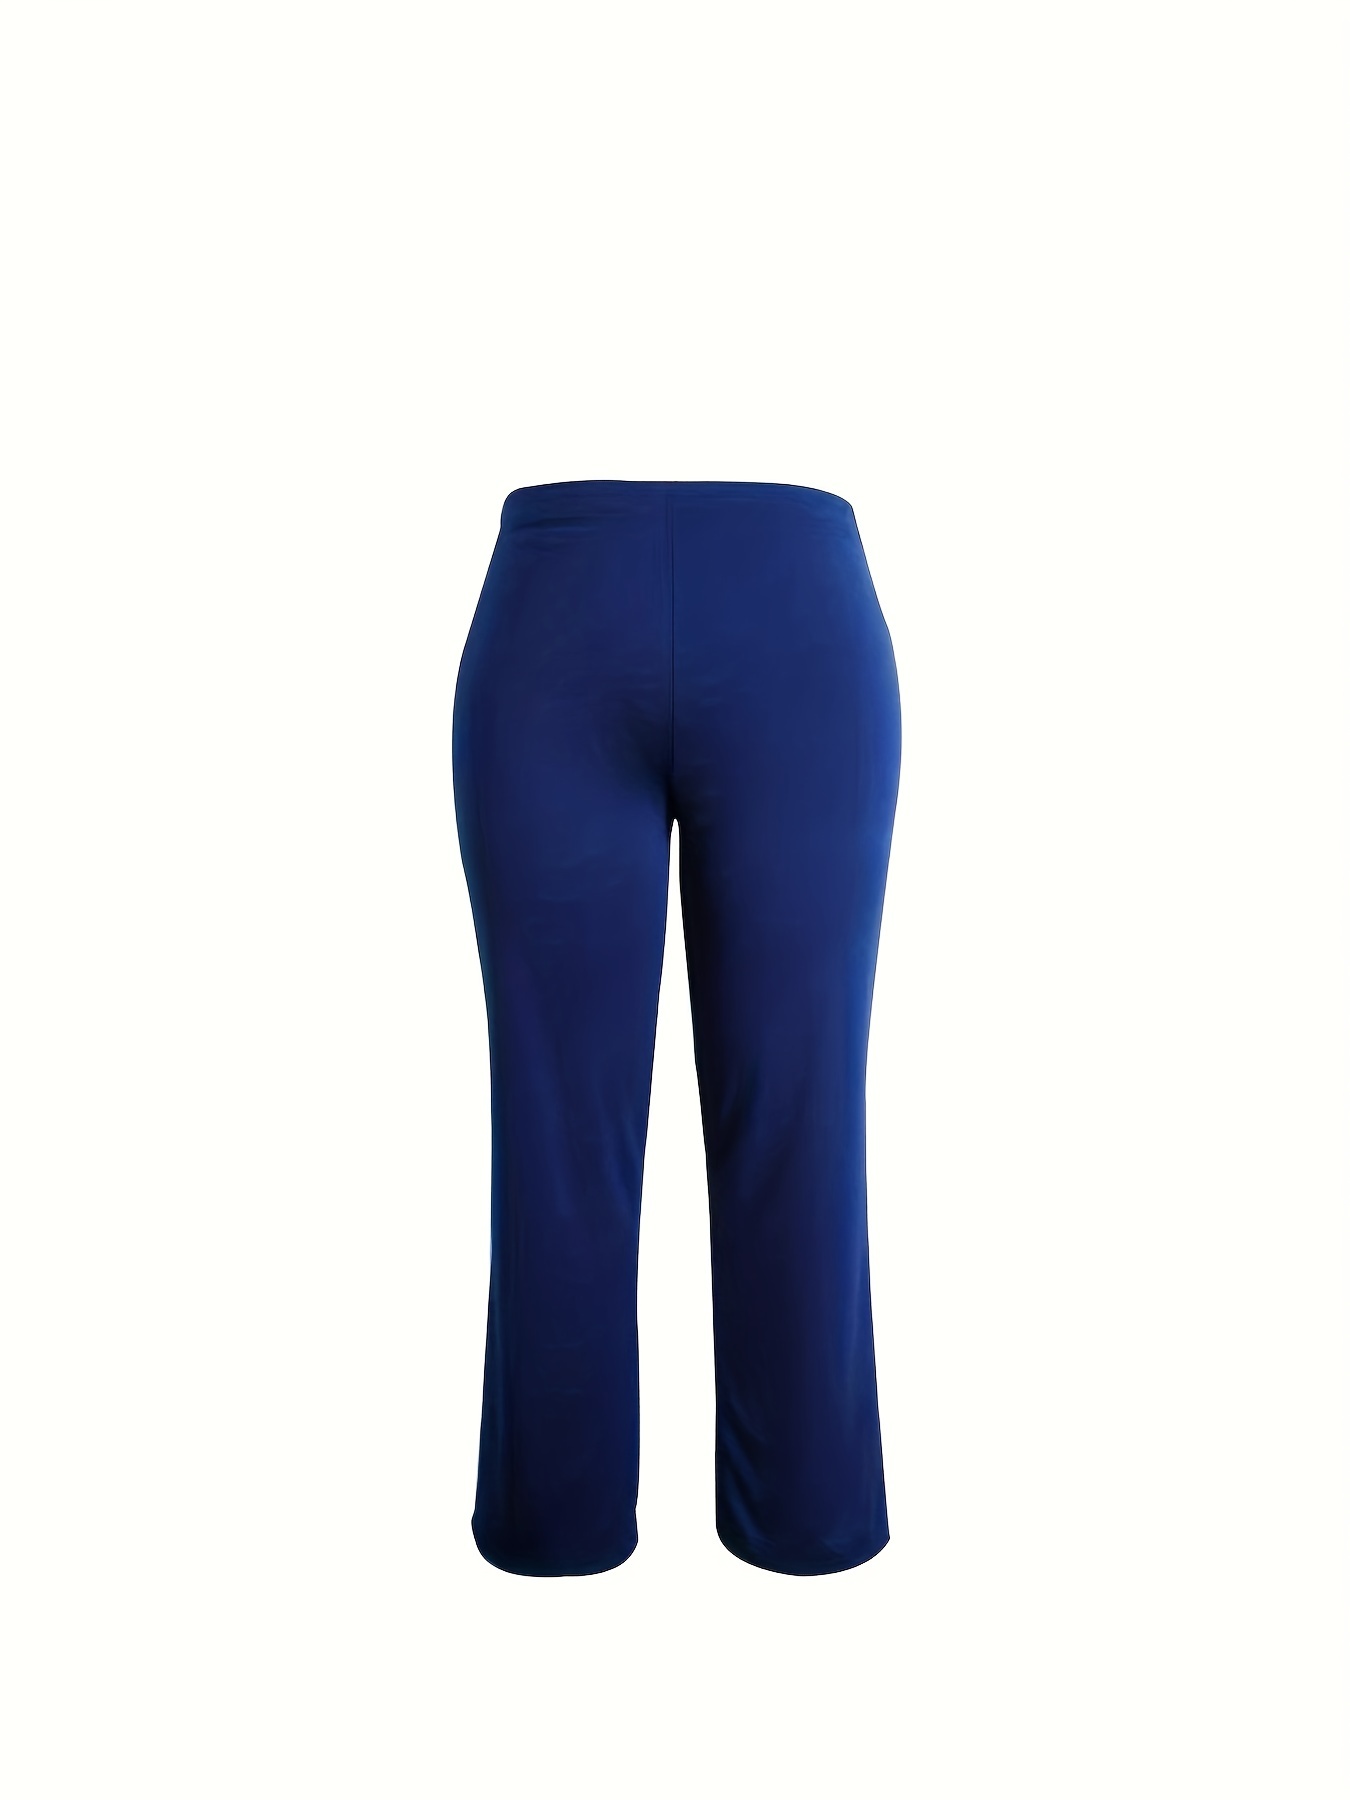 Plain Navy Blue Women Plus Size Straight Leg Trouser, For Casual